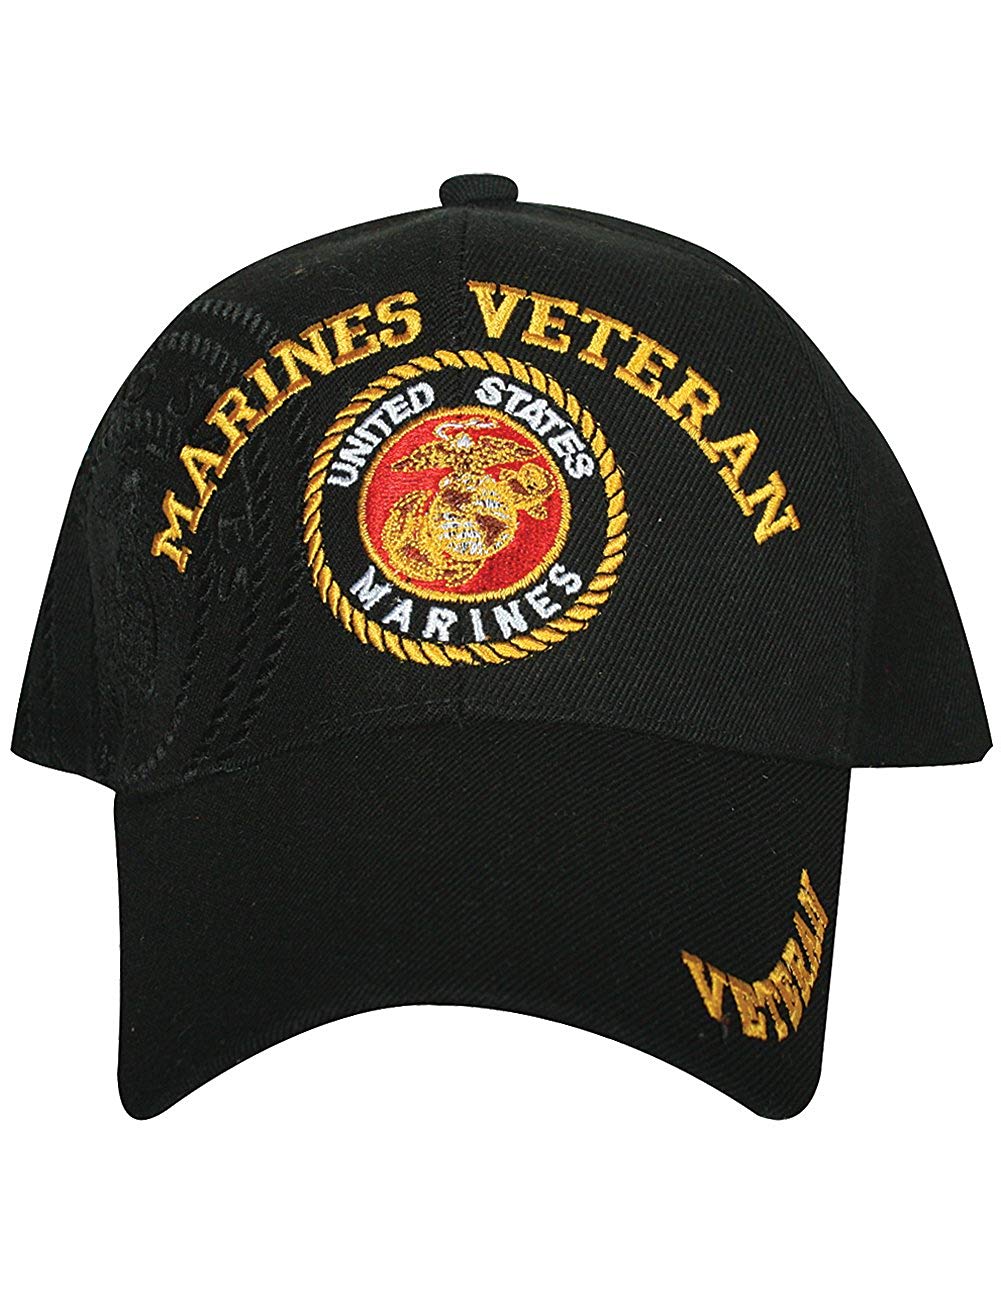 Military Branch Logo - Amazon.com: Fox Outdoor US Marines USMC Veteran Embroidered Military ...